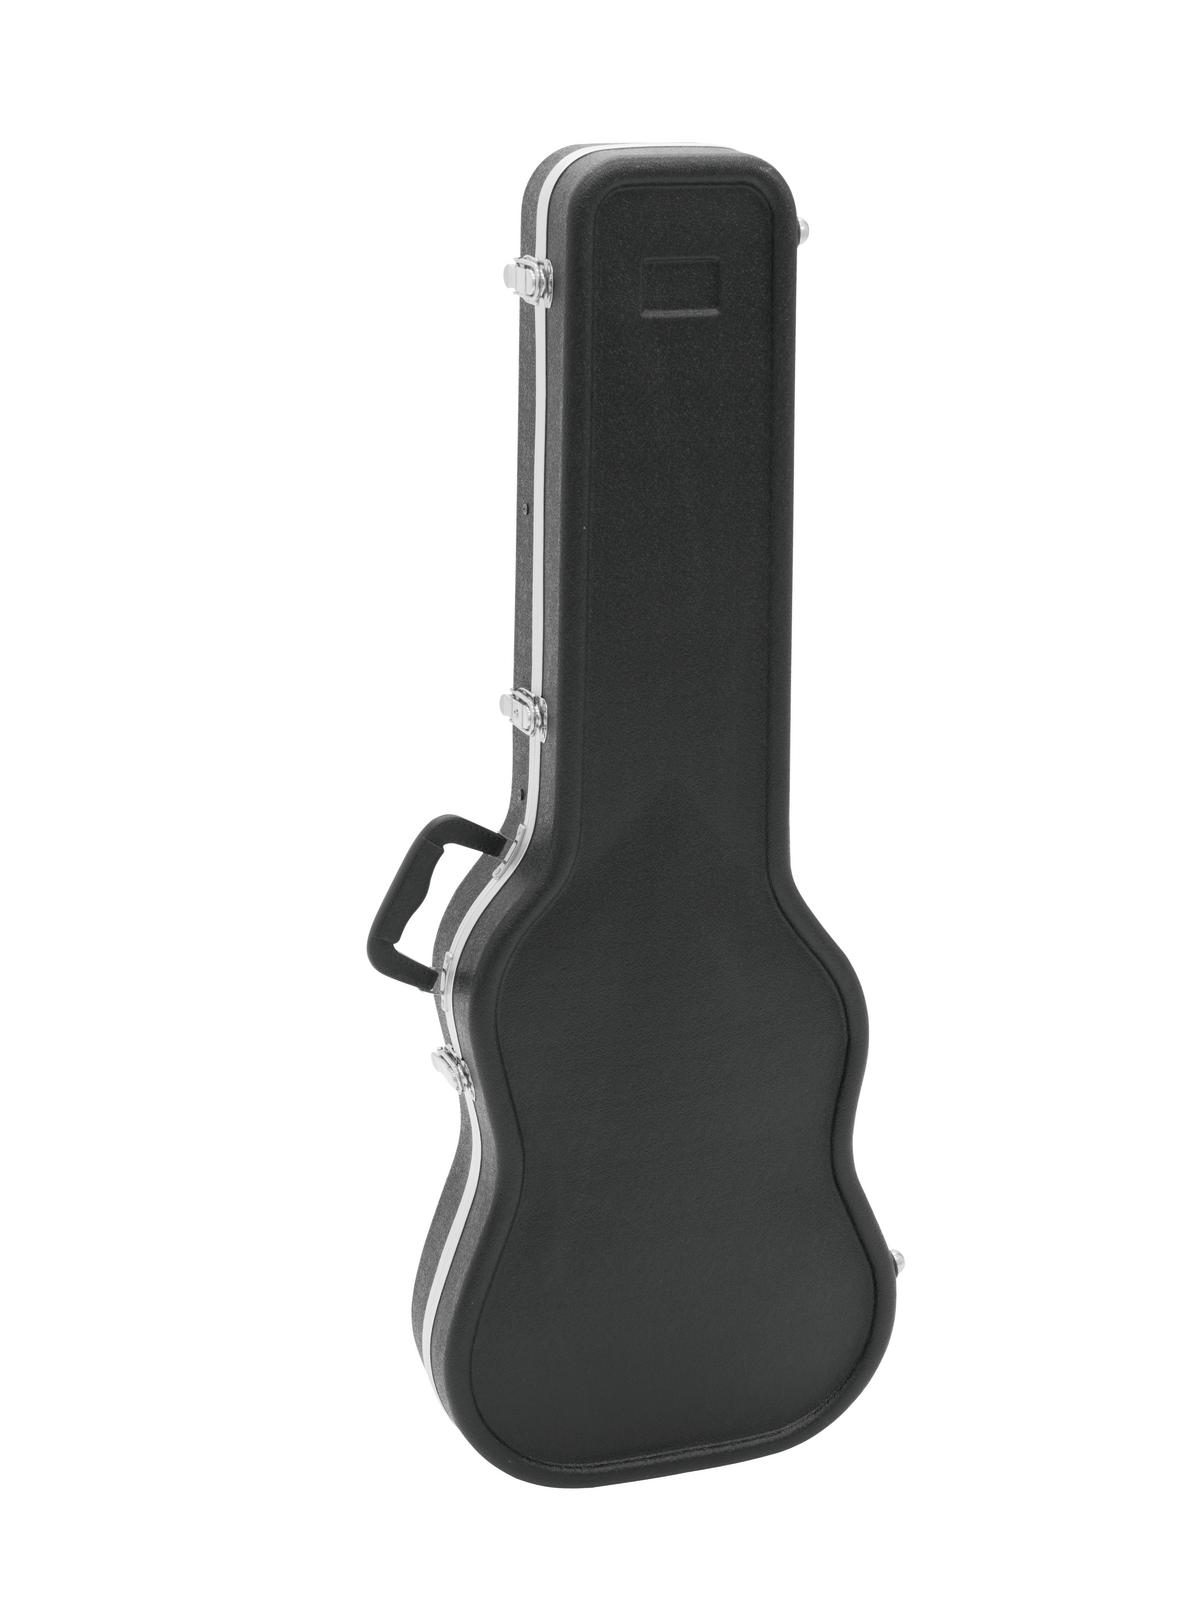 Dimavery tvarovaný kufr pro Elektrickou kytaru